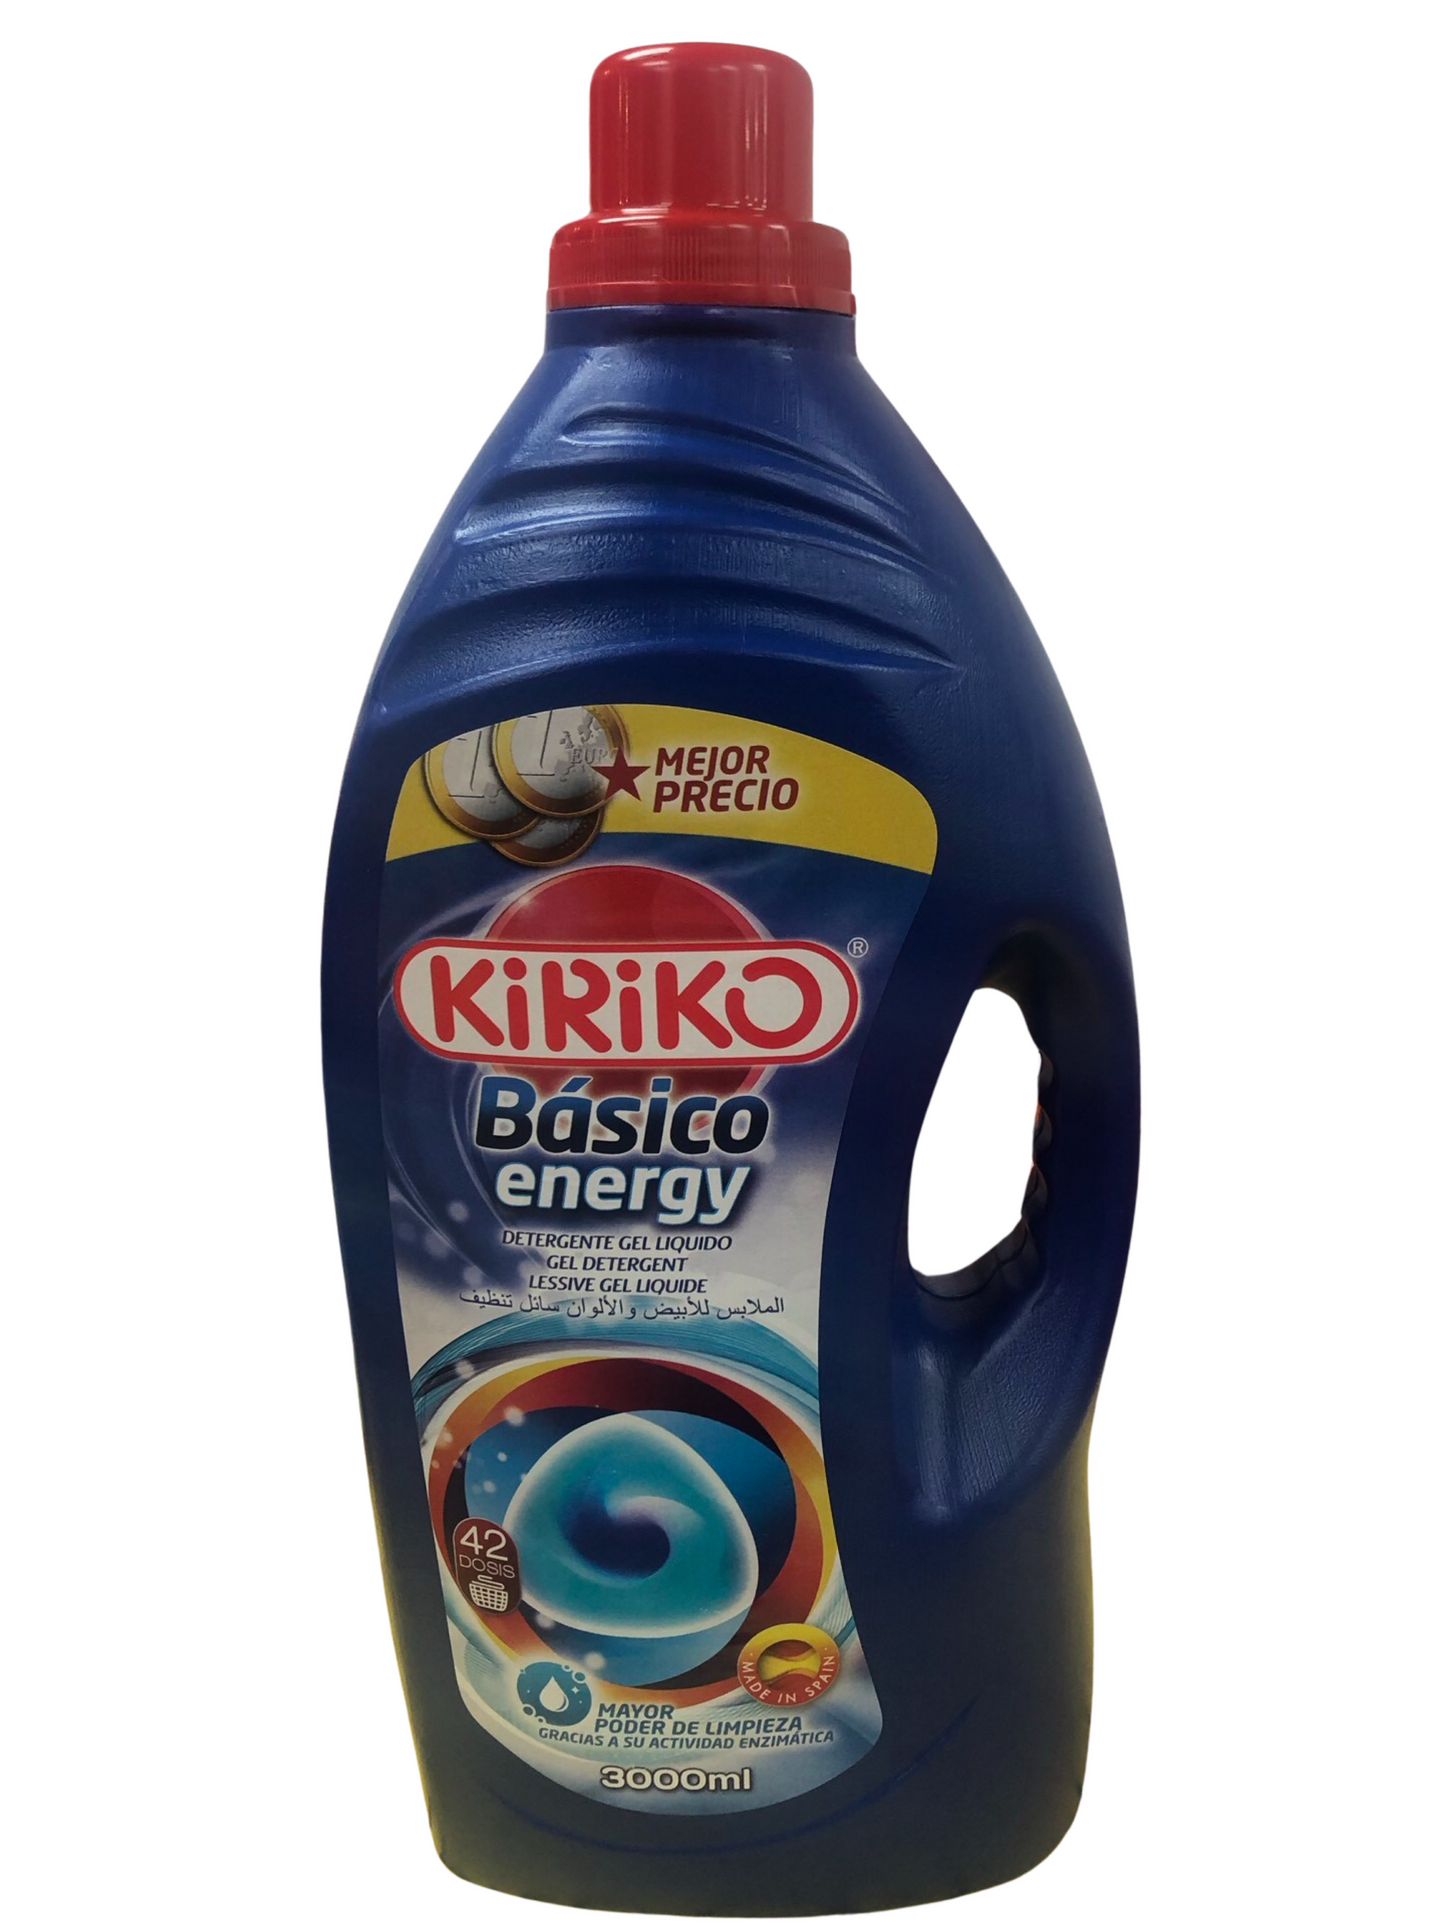 Kiriko basic energy detergent 42 wash